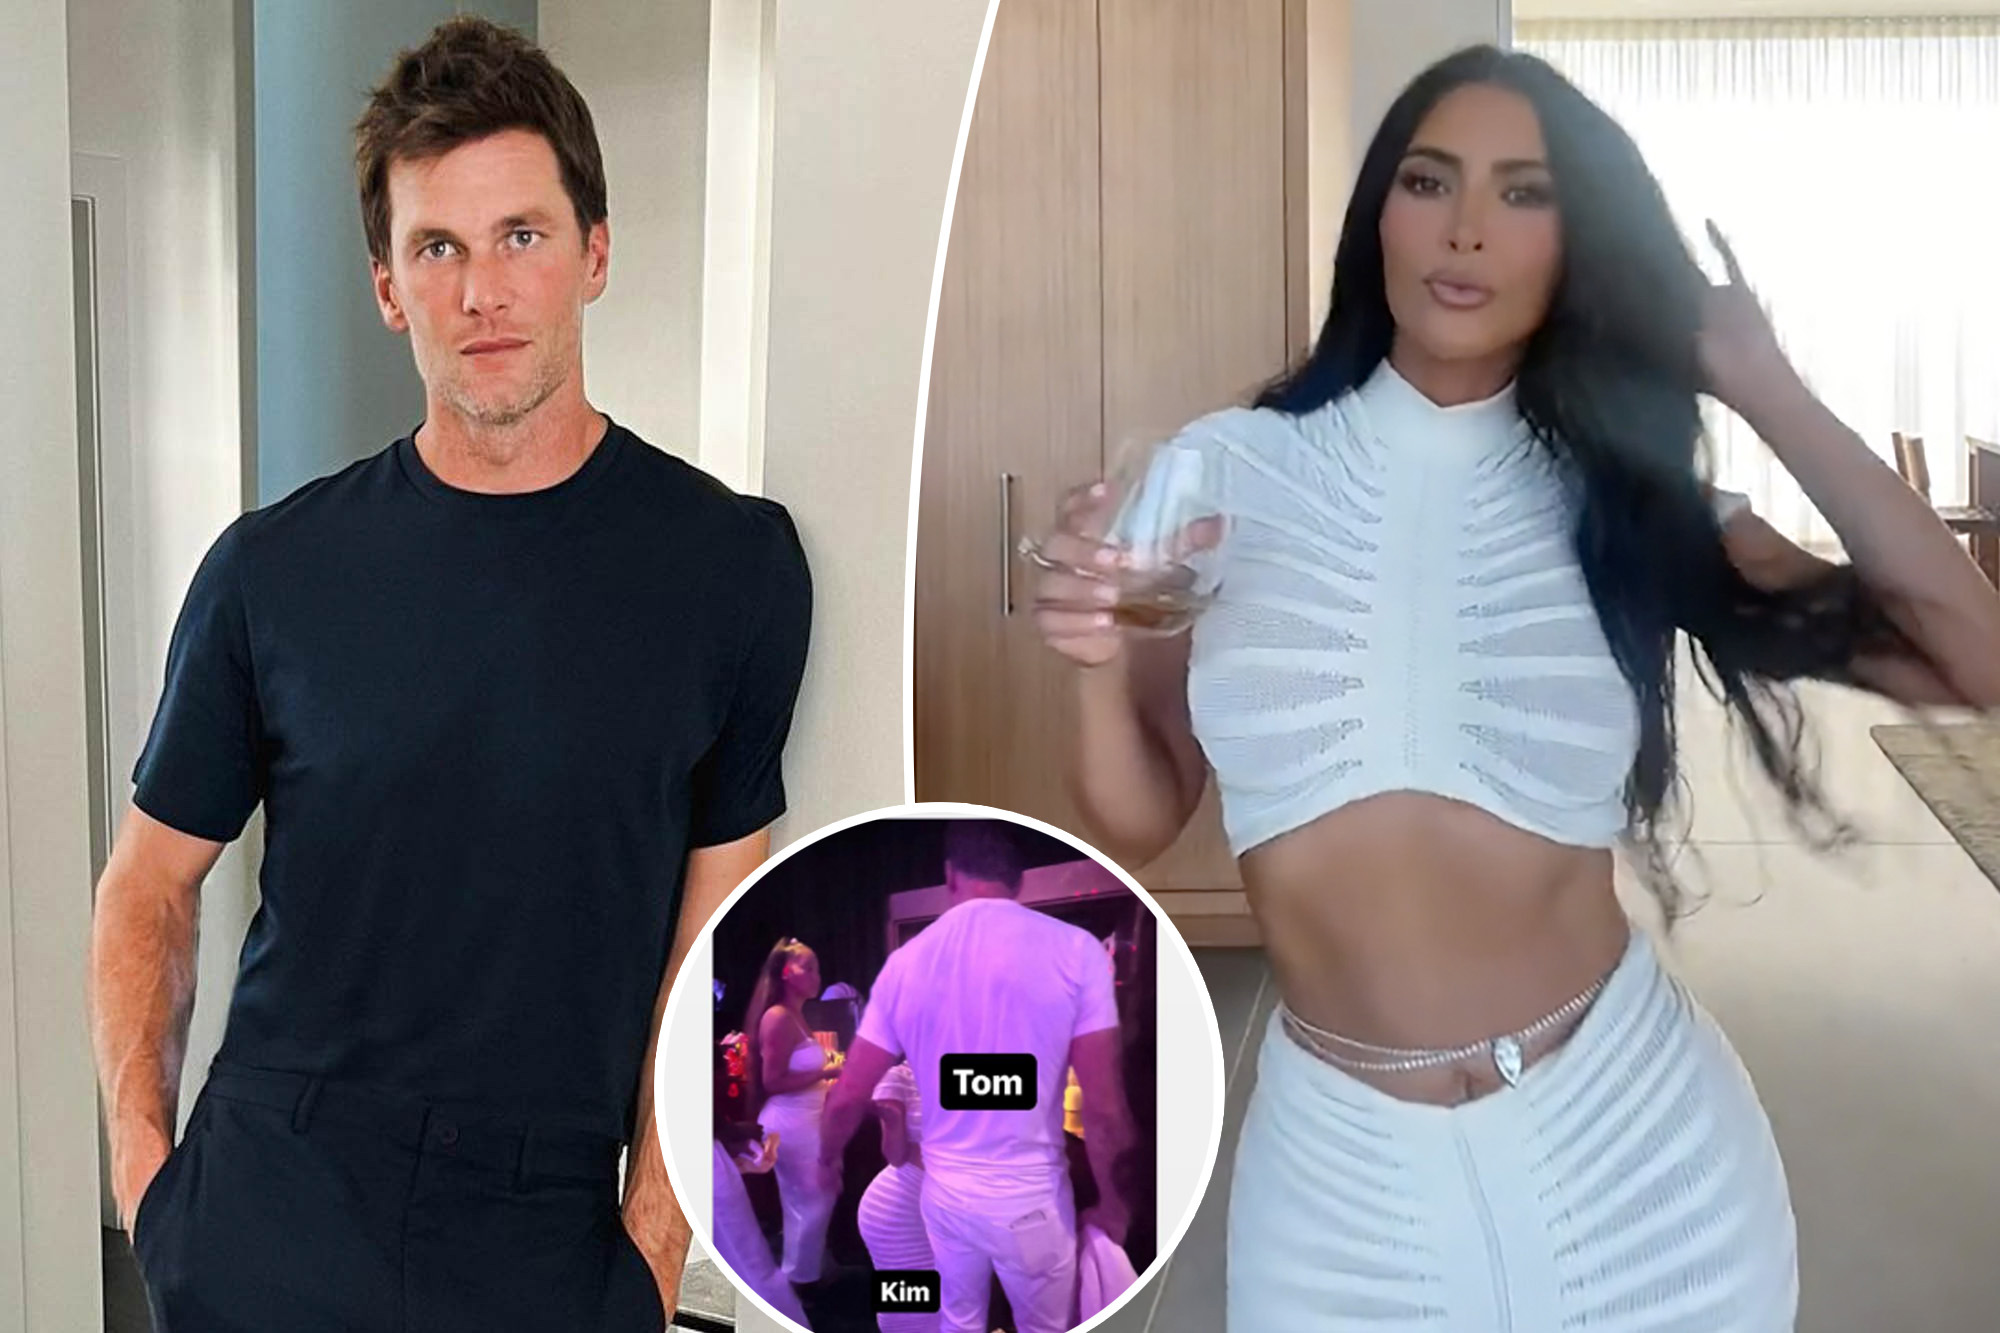 Kim Kardashian and Tom Brady pictured together at Michael Rubin’s